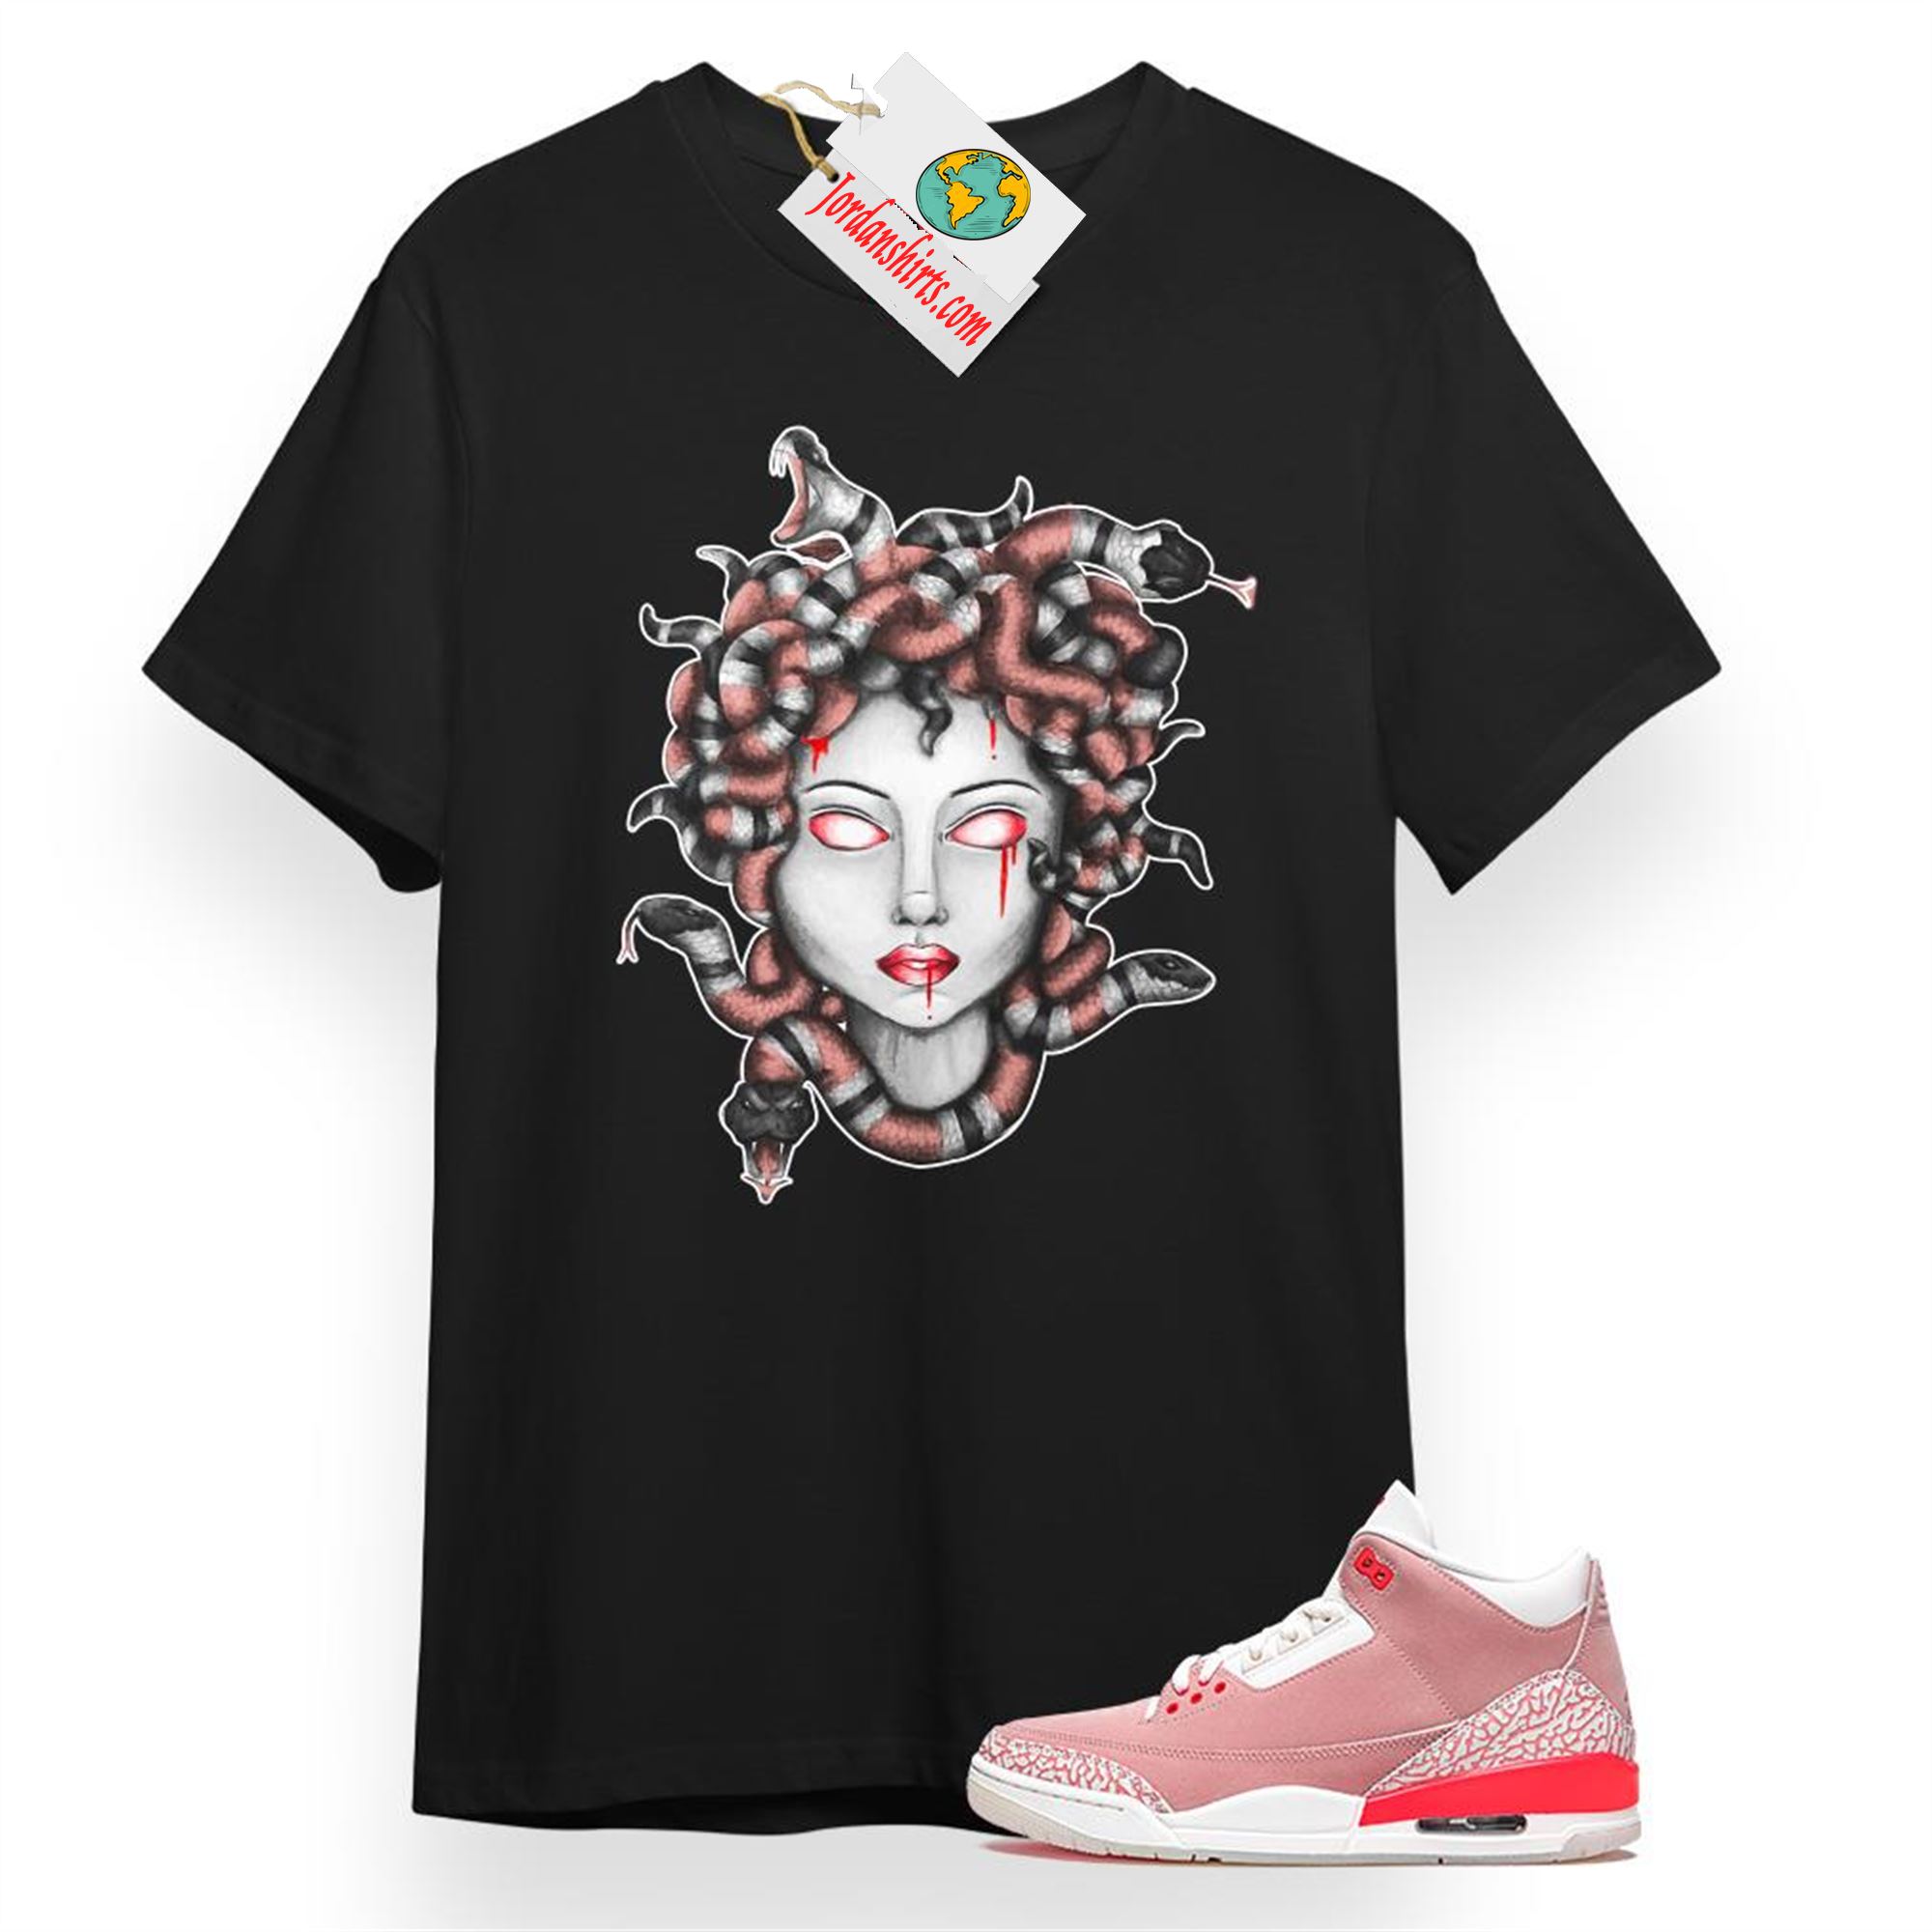 Jordan 3 Shirt, Medusa Snake Black T-shirt Air Jordan 3 Rust Pink 3s Size Up To 5xl